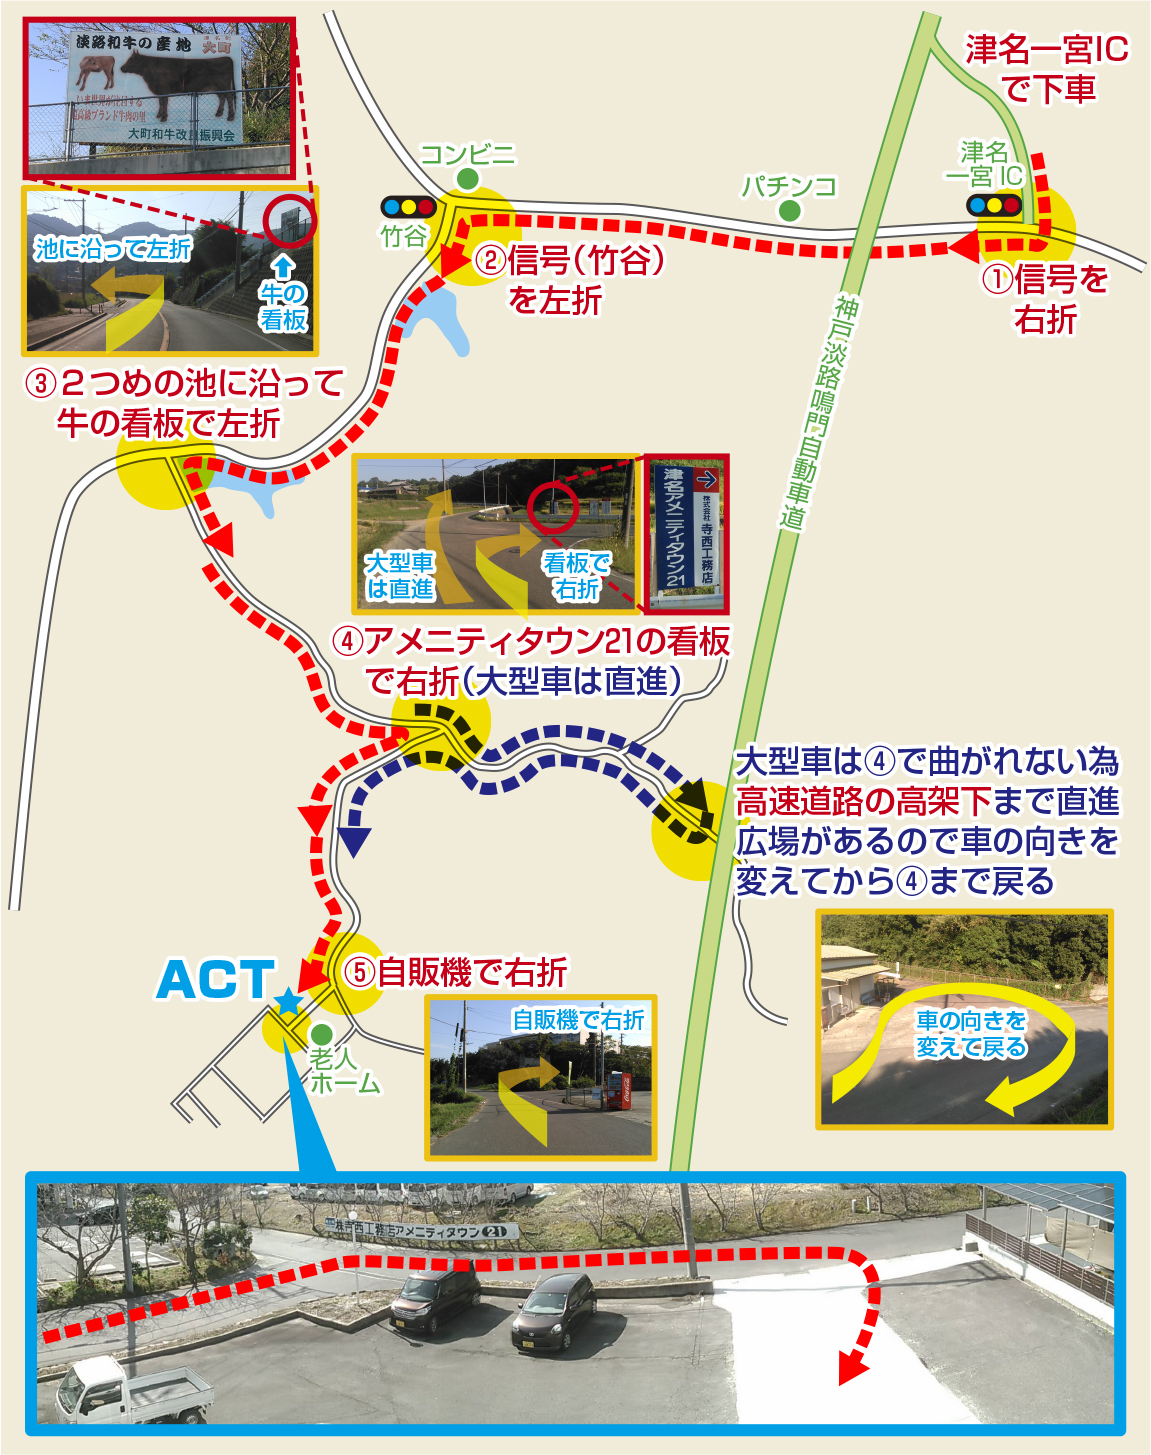 act-map.jpg